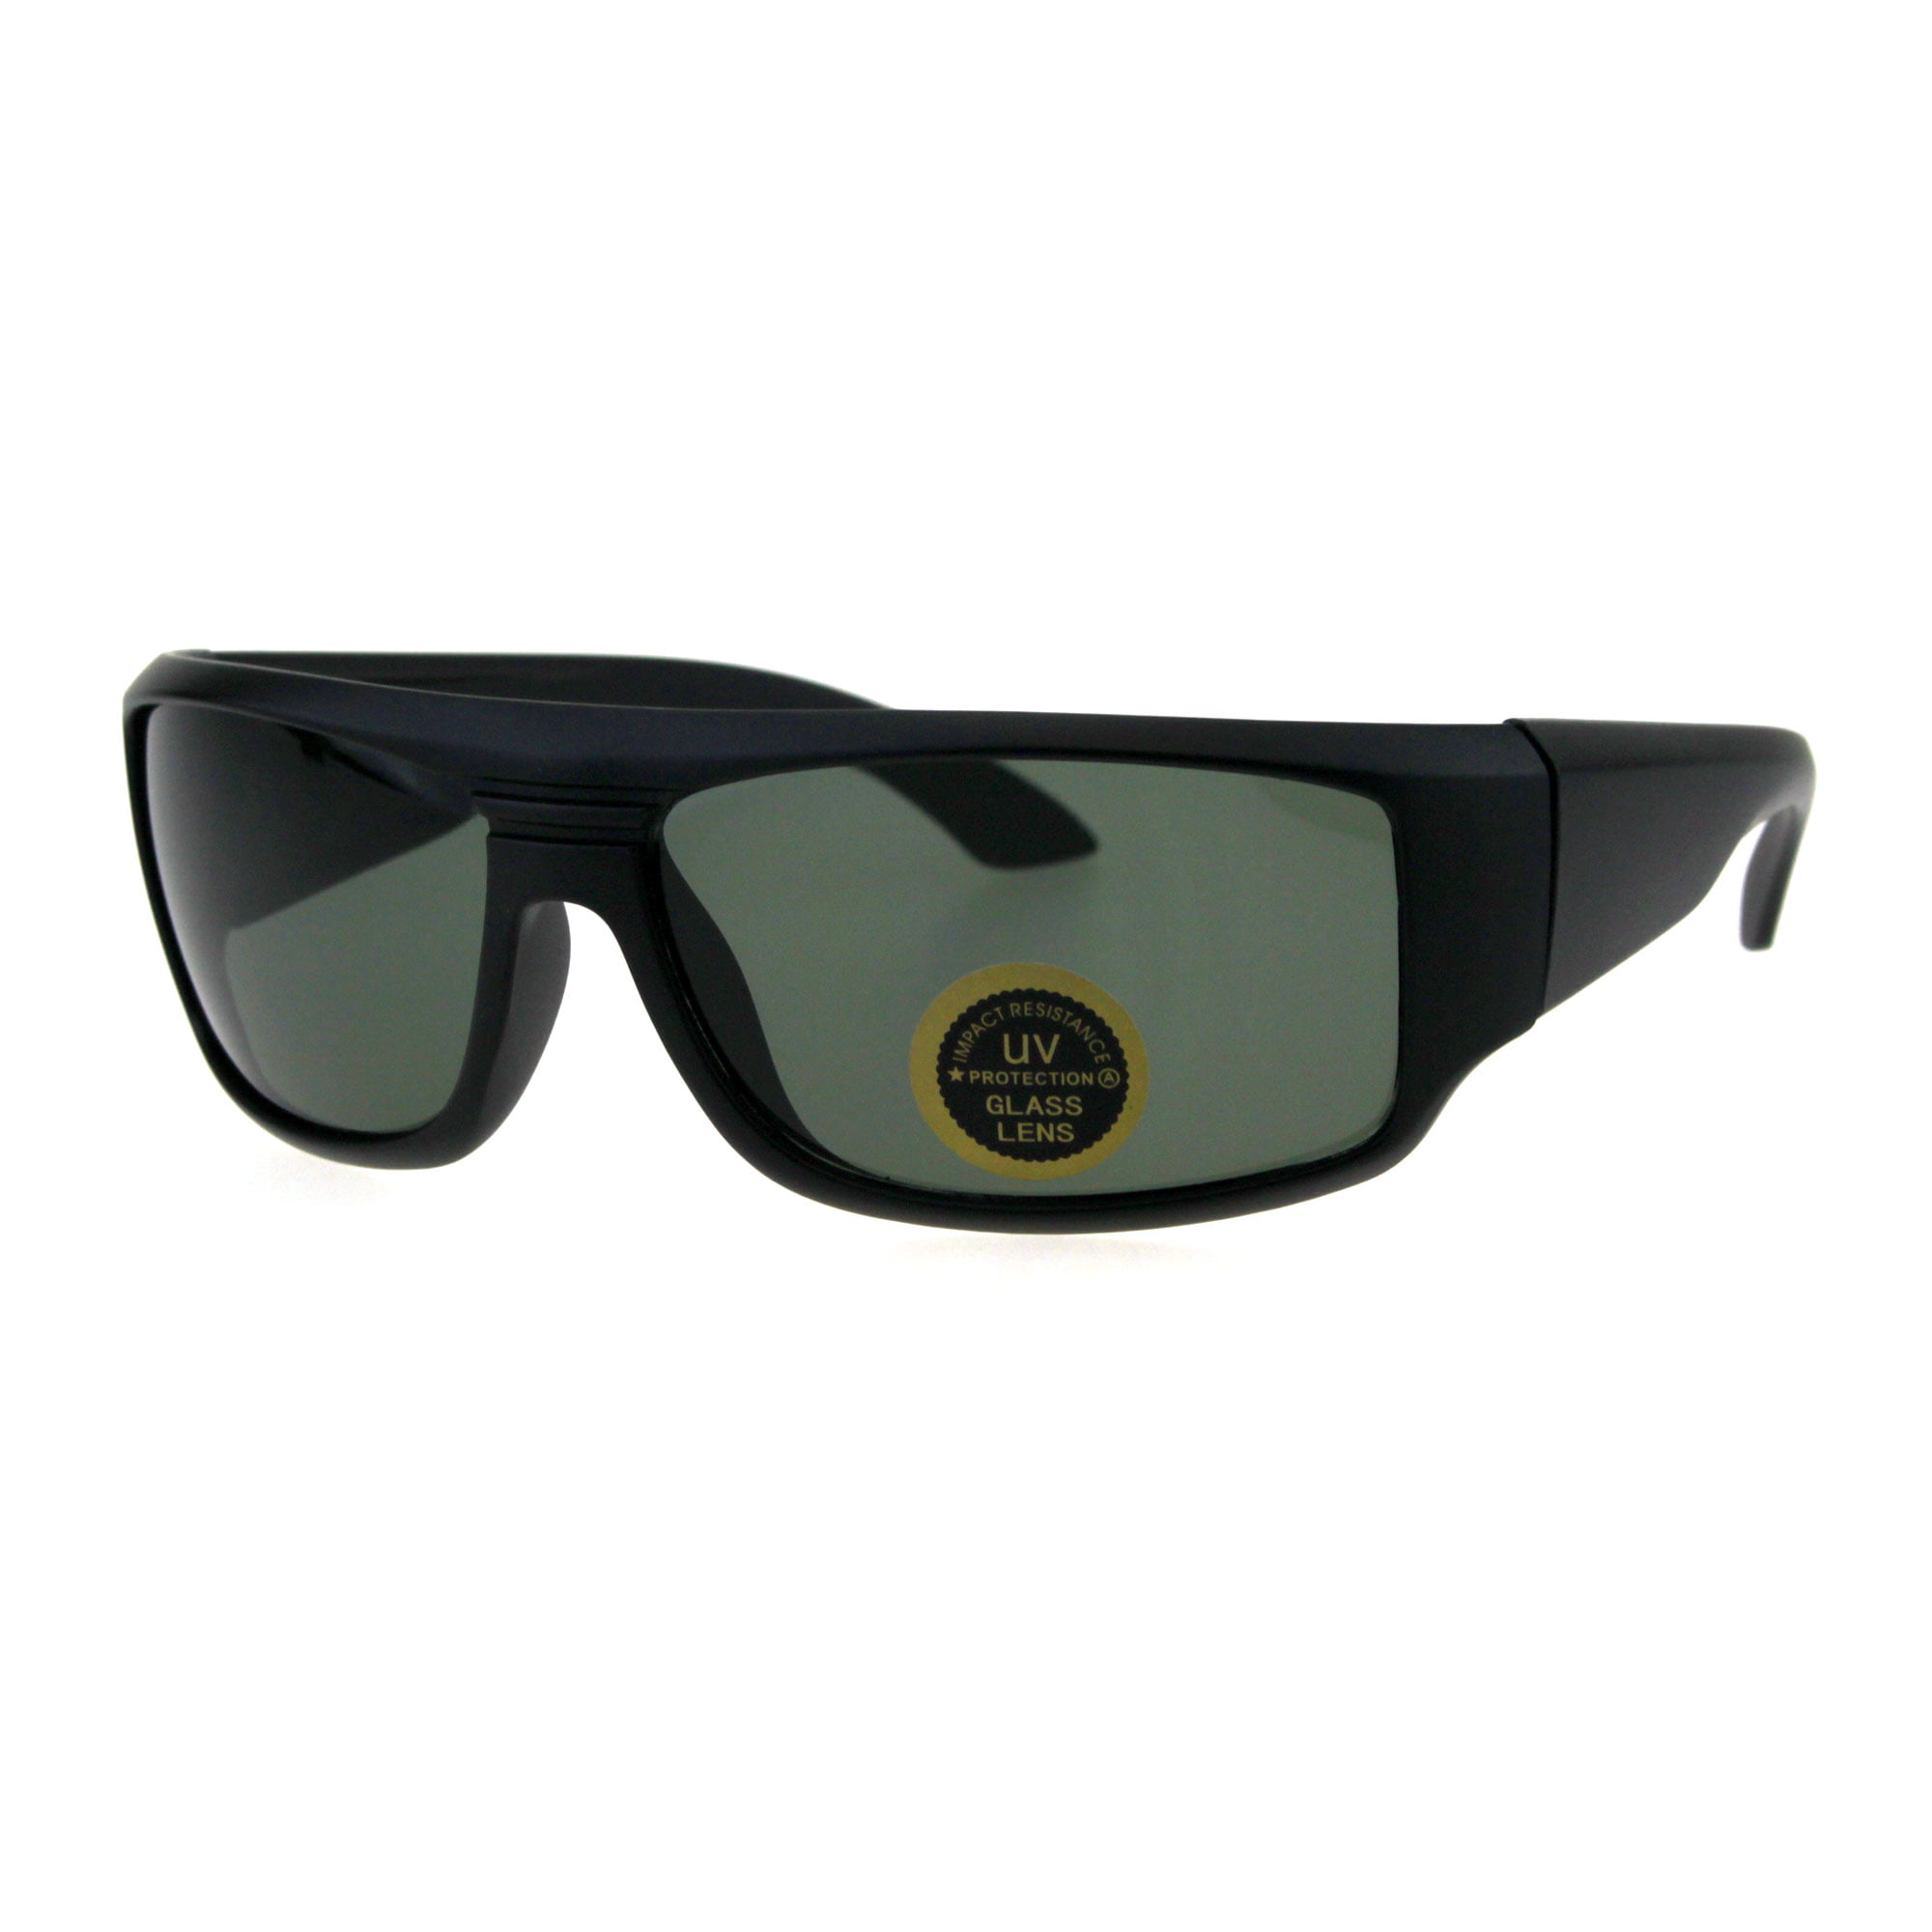 SA106 Tempered Glass Lens Mens Flat Top Motorcycle Biker Rectangle Sunglasses Matte Black Green, Men's, Size: One Size